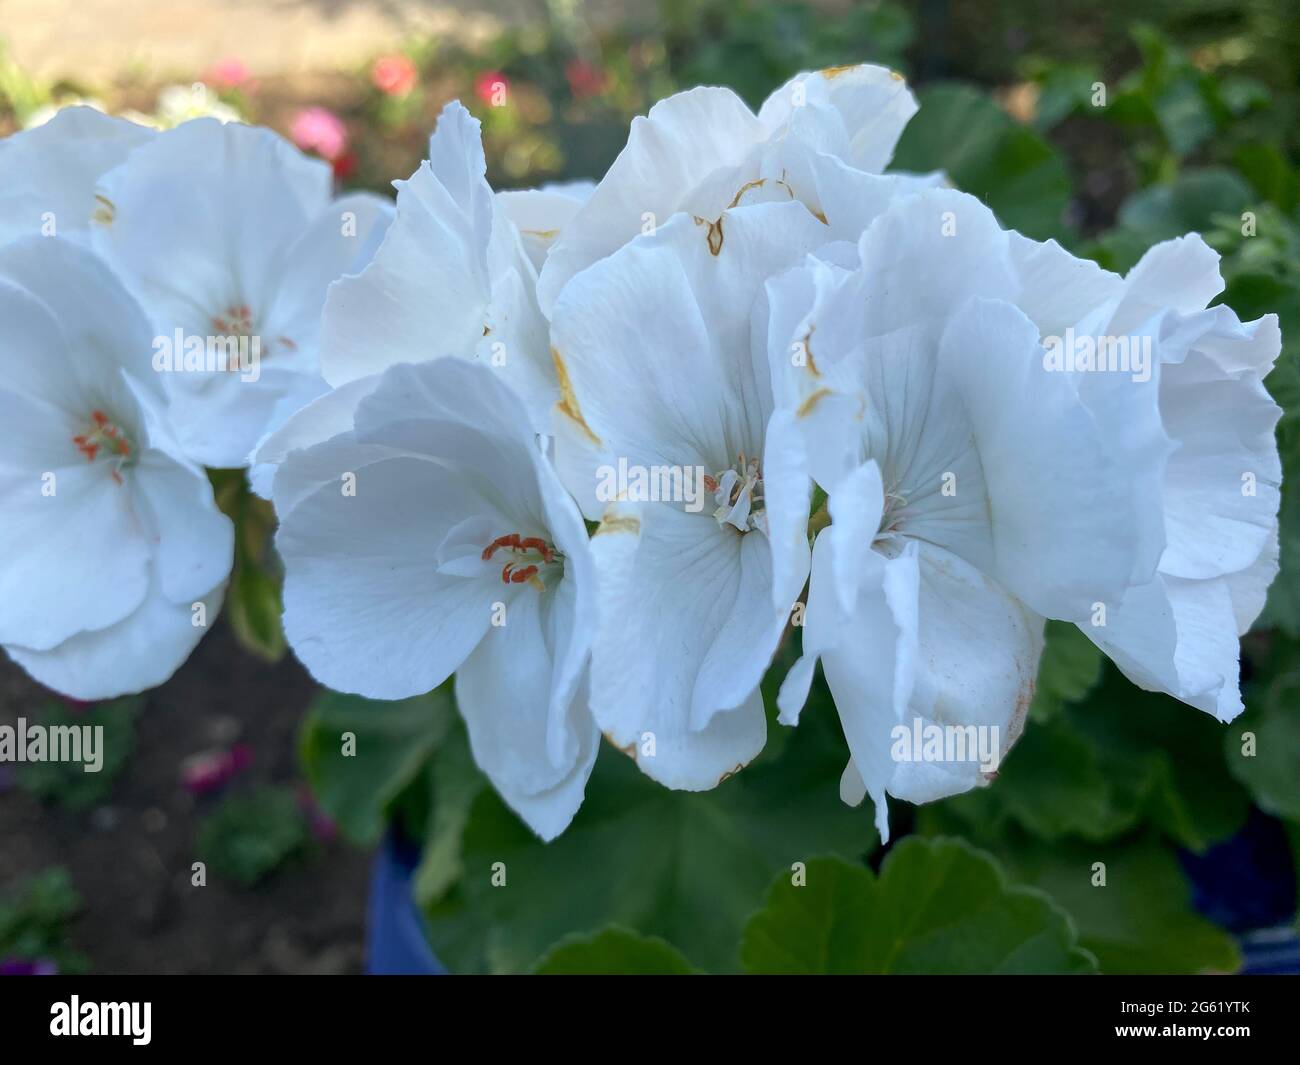 White horseshoe geranium in bloom close-up view of Stock Photo